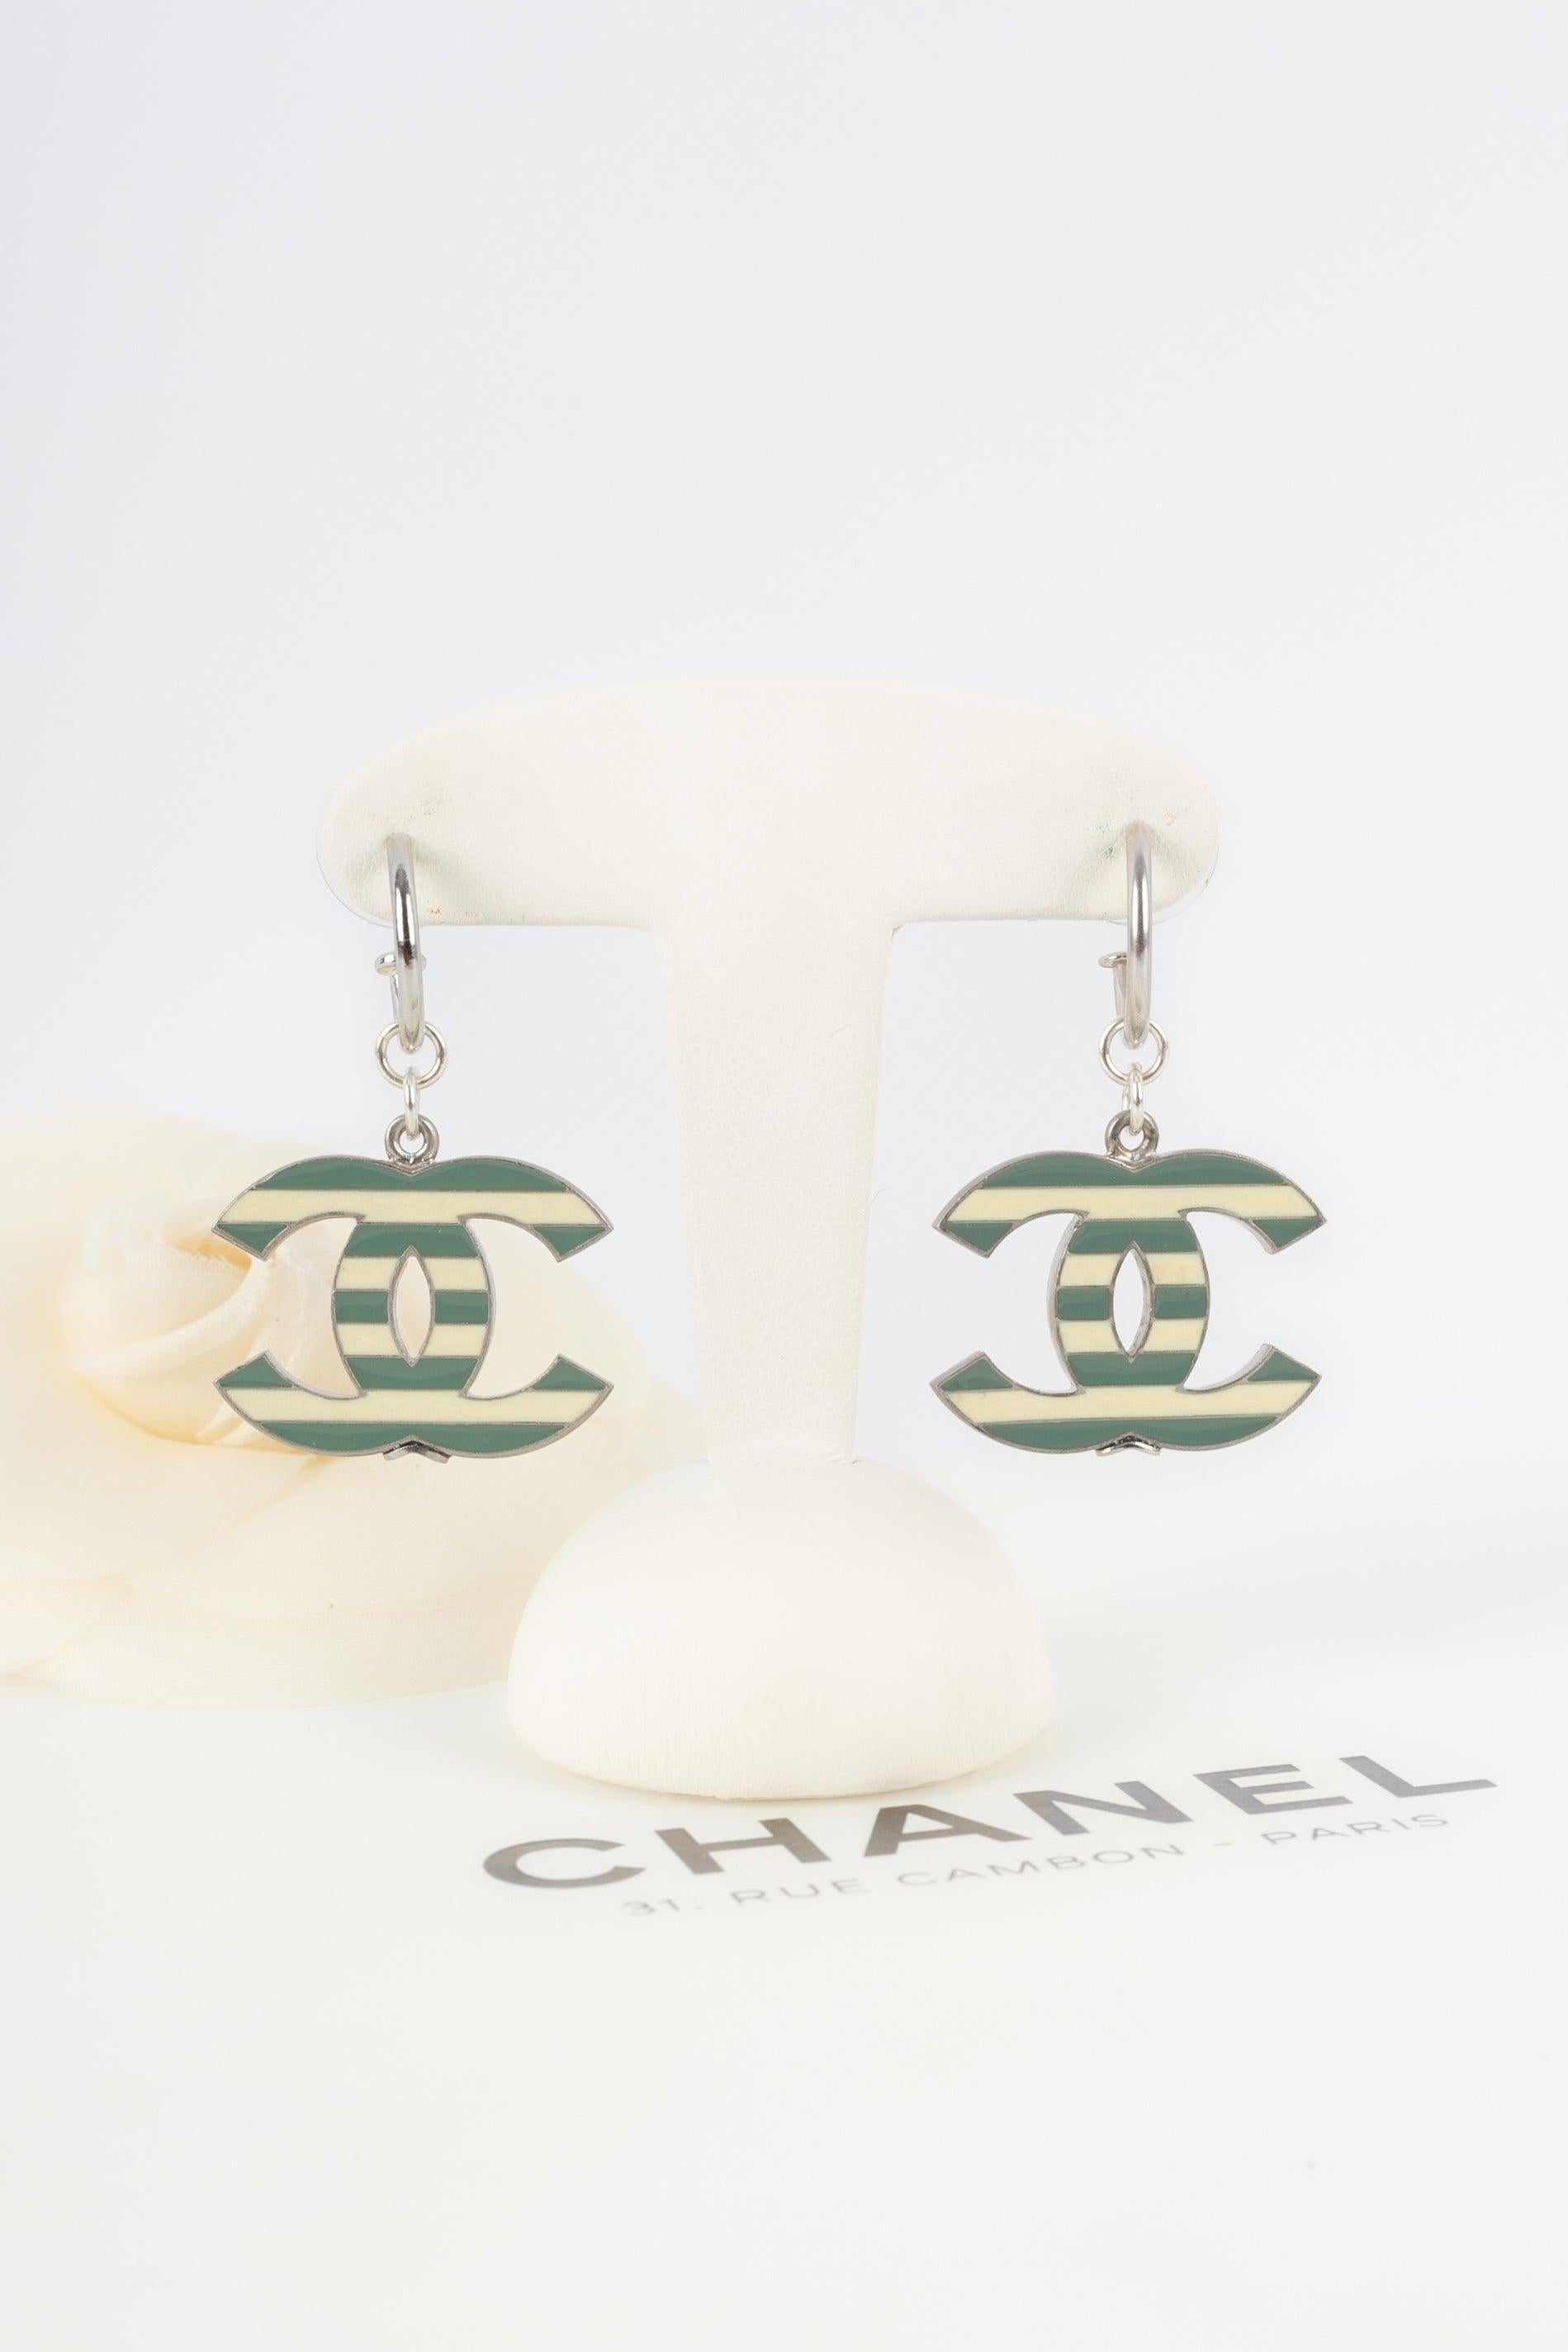 Chanel CC Earrings with Enamel, 2013 For Sale 2